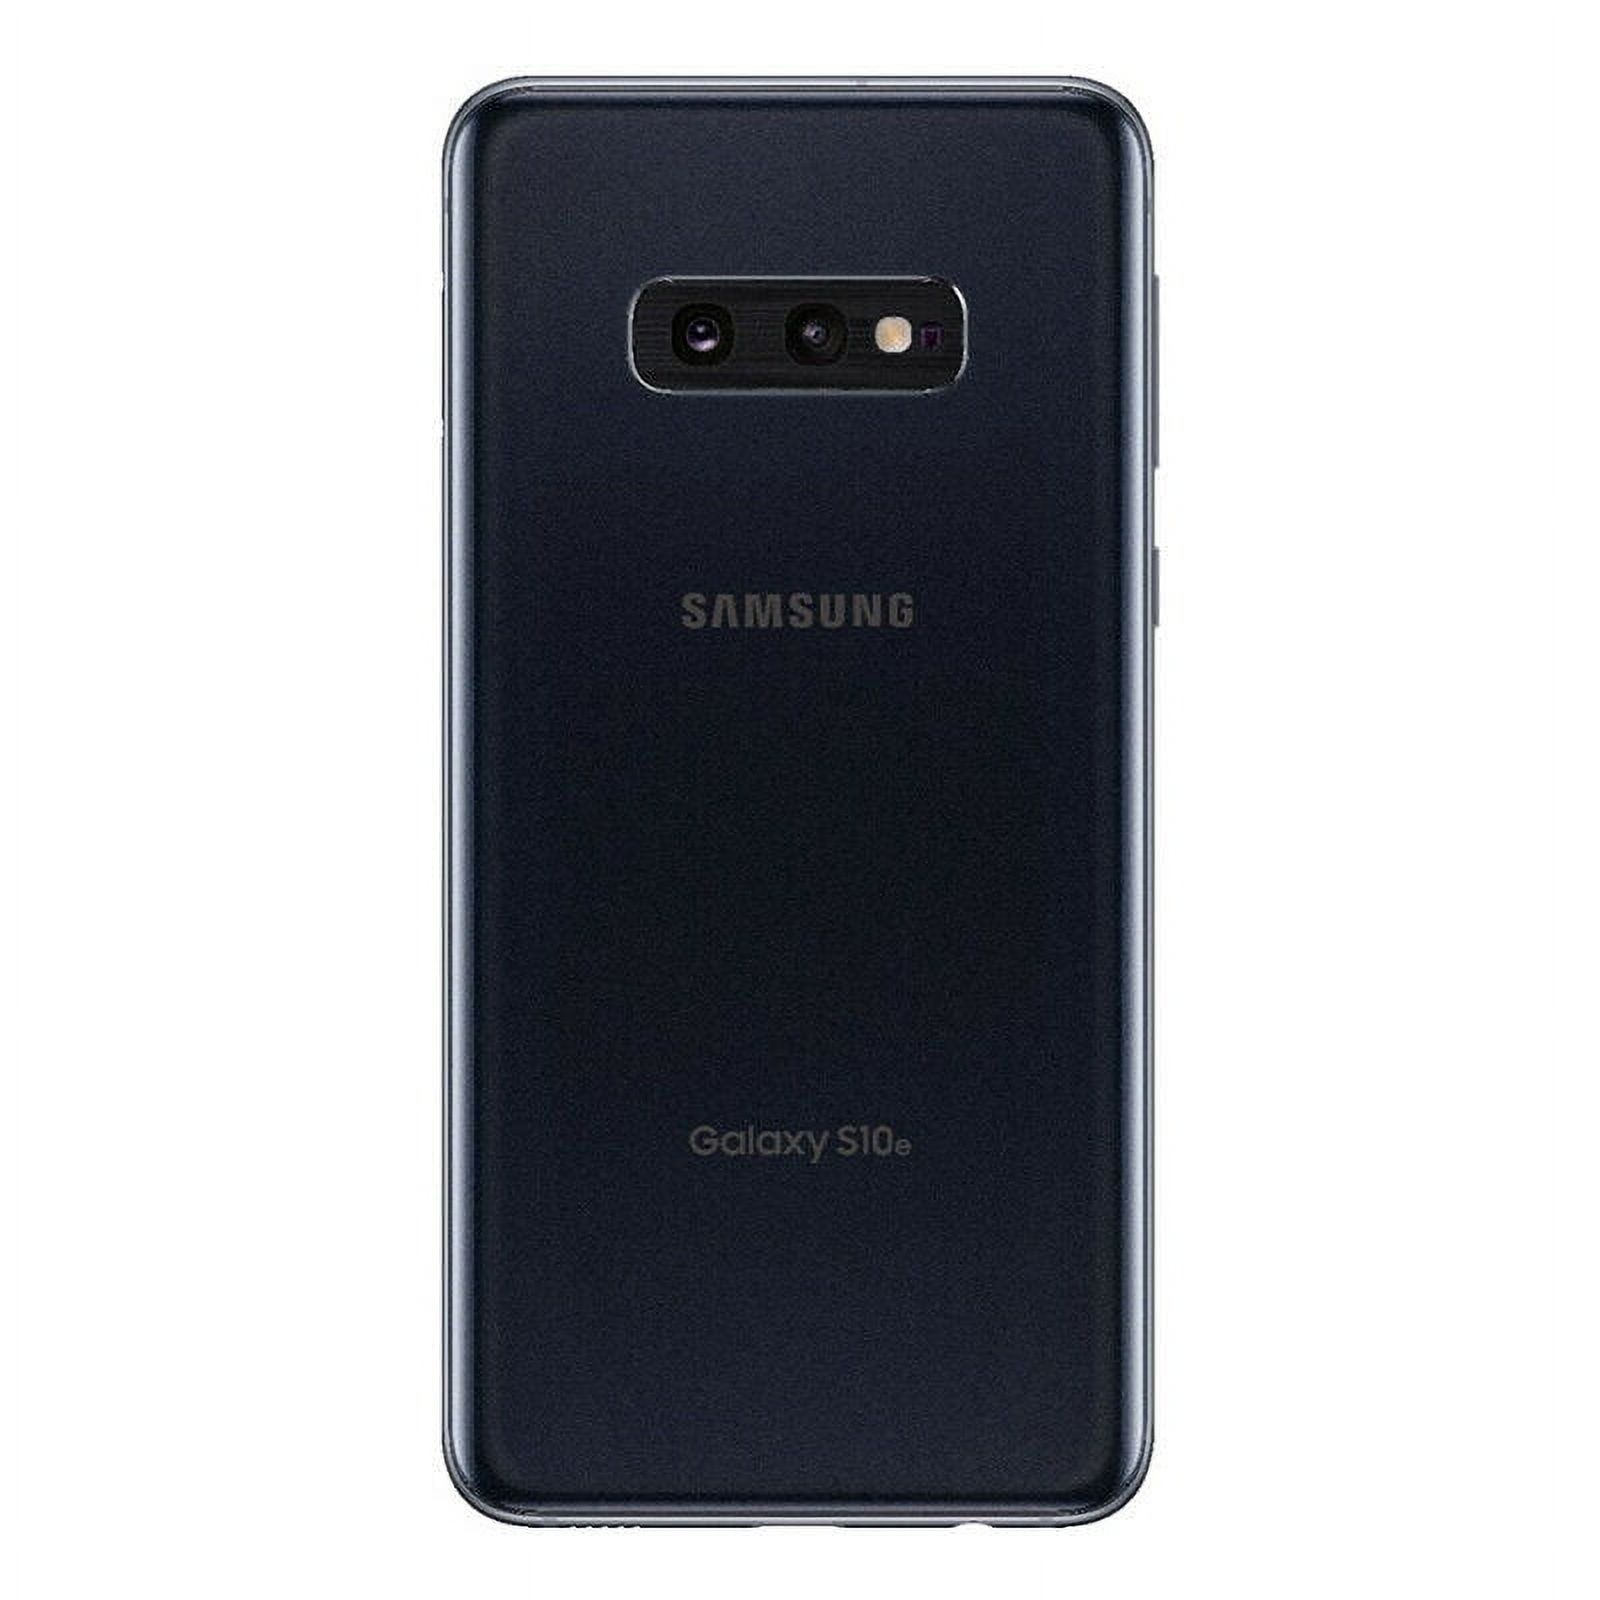 Restored Samsung Galaxy S10e G970U 128GB Factory Unlocked Android Smartphone (Refurbished) - image 1 of 5